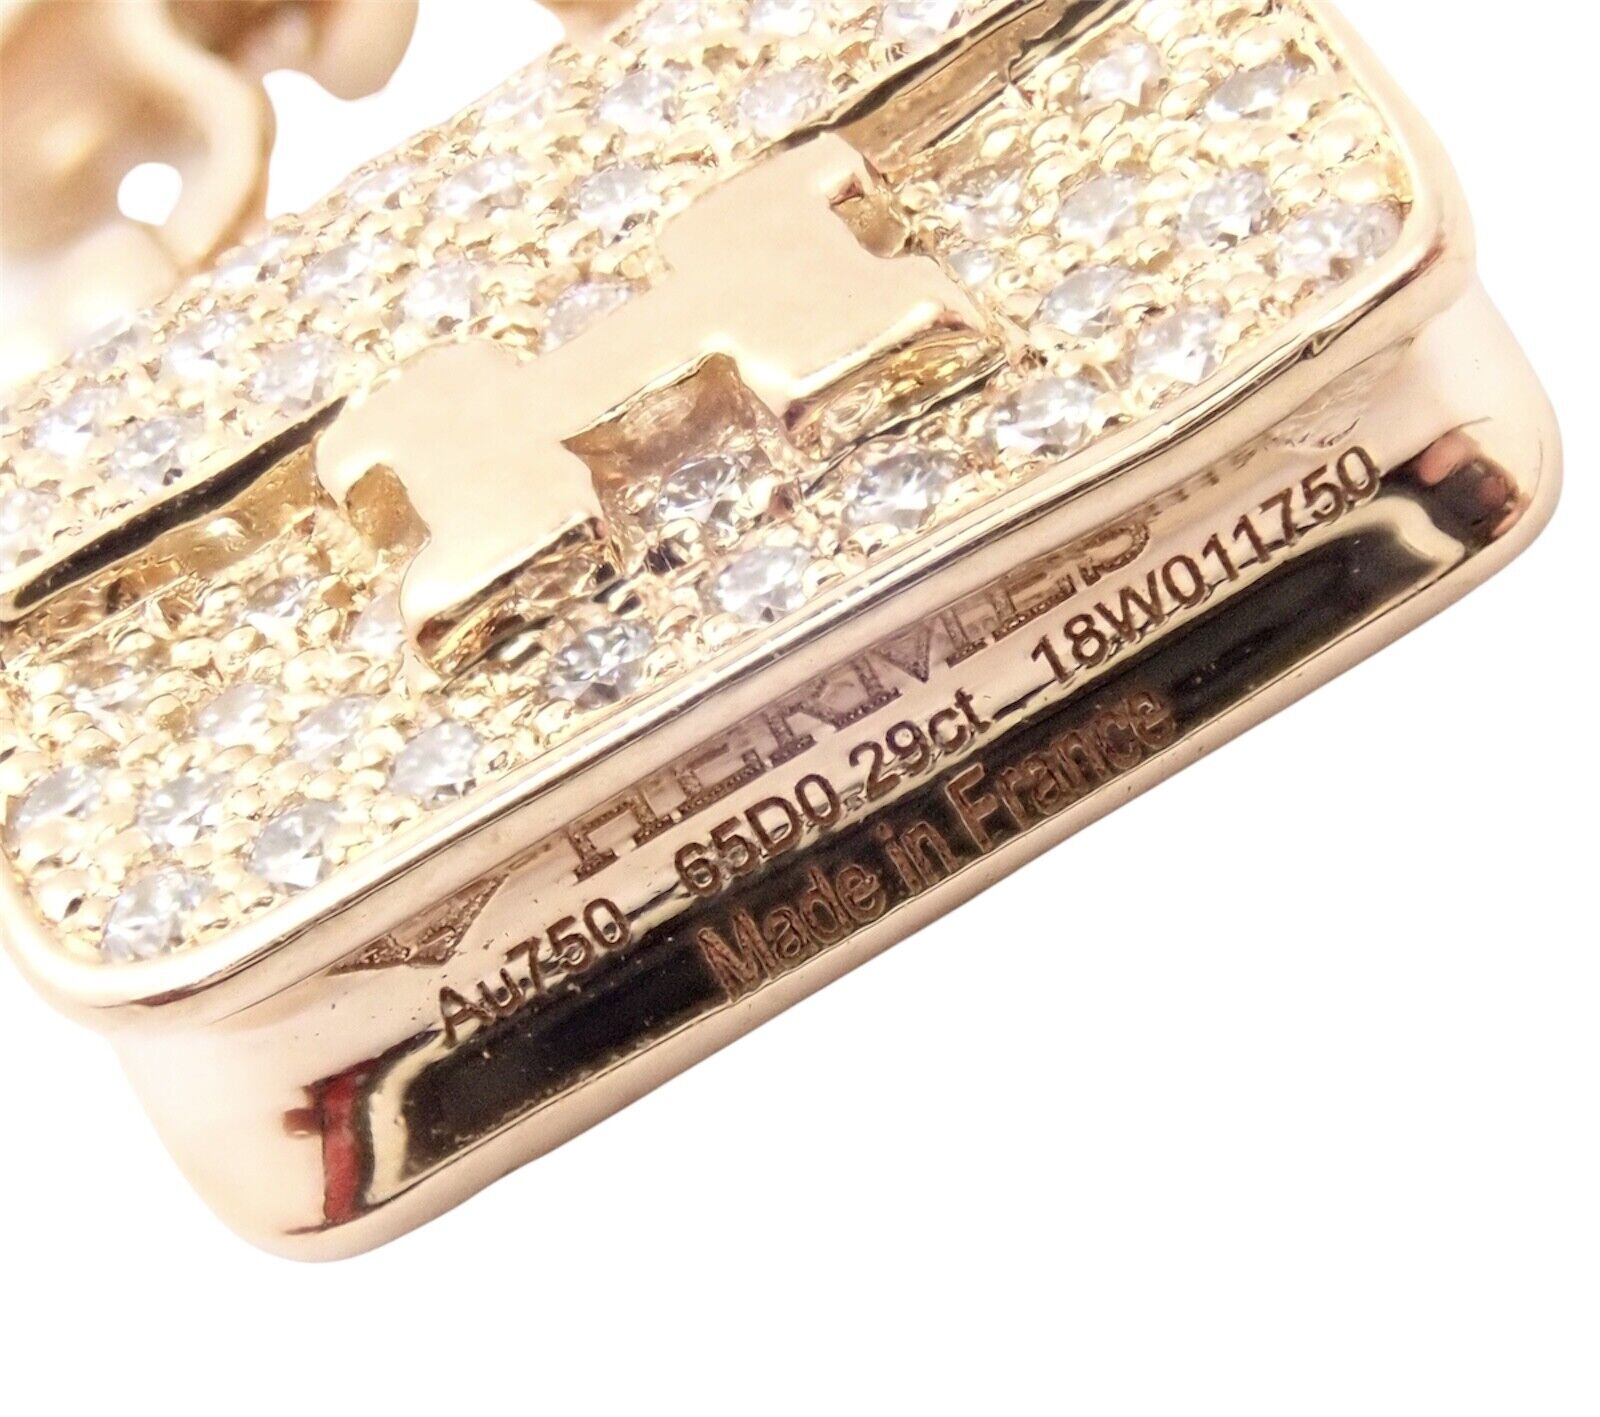 Hermes - Constance Rose Gold Amulette Bracelet, Small Model with 1 Diamond